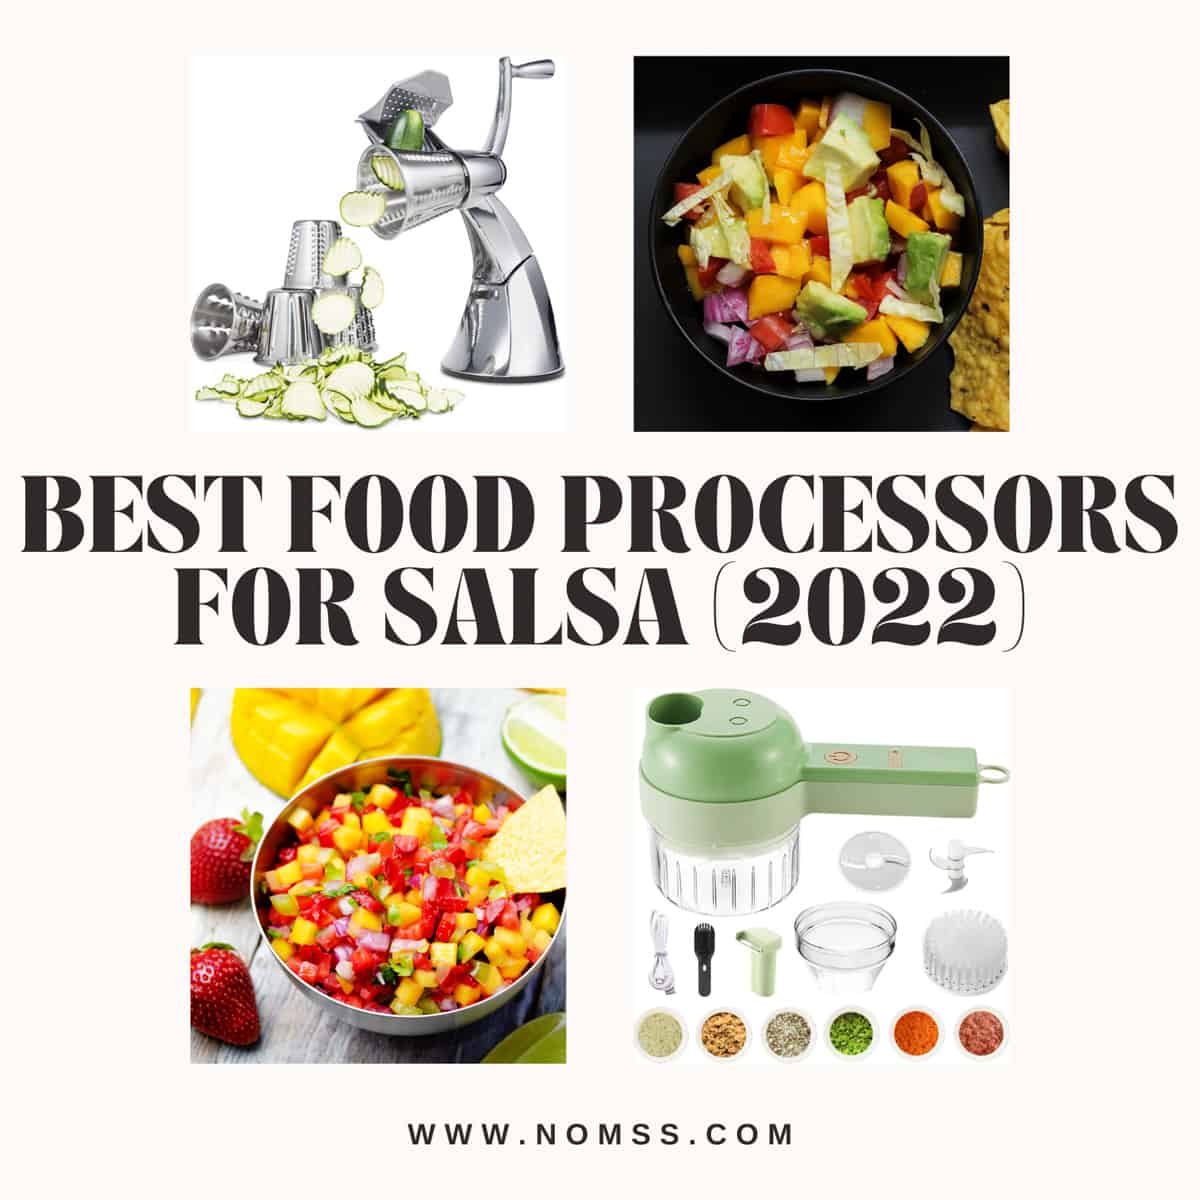  Salsa Master Salsa Maker, Food Chopper, Mixer and